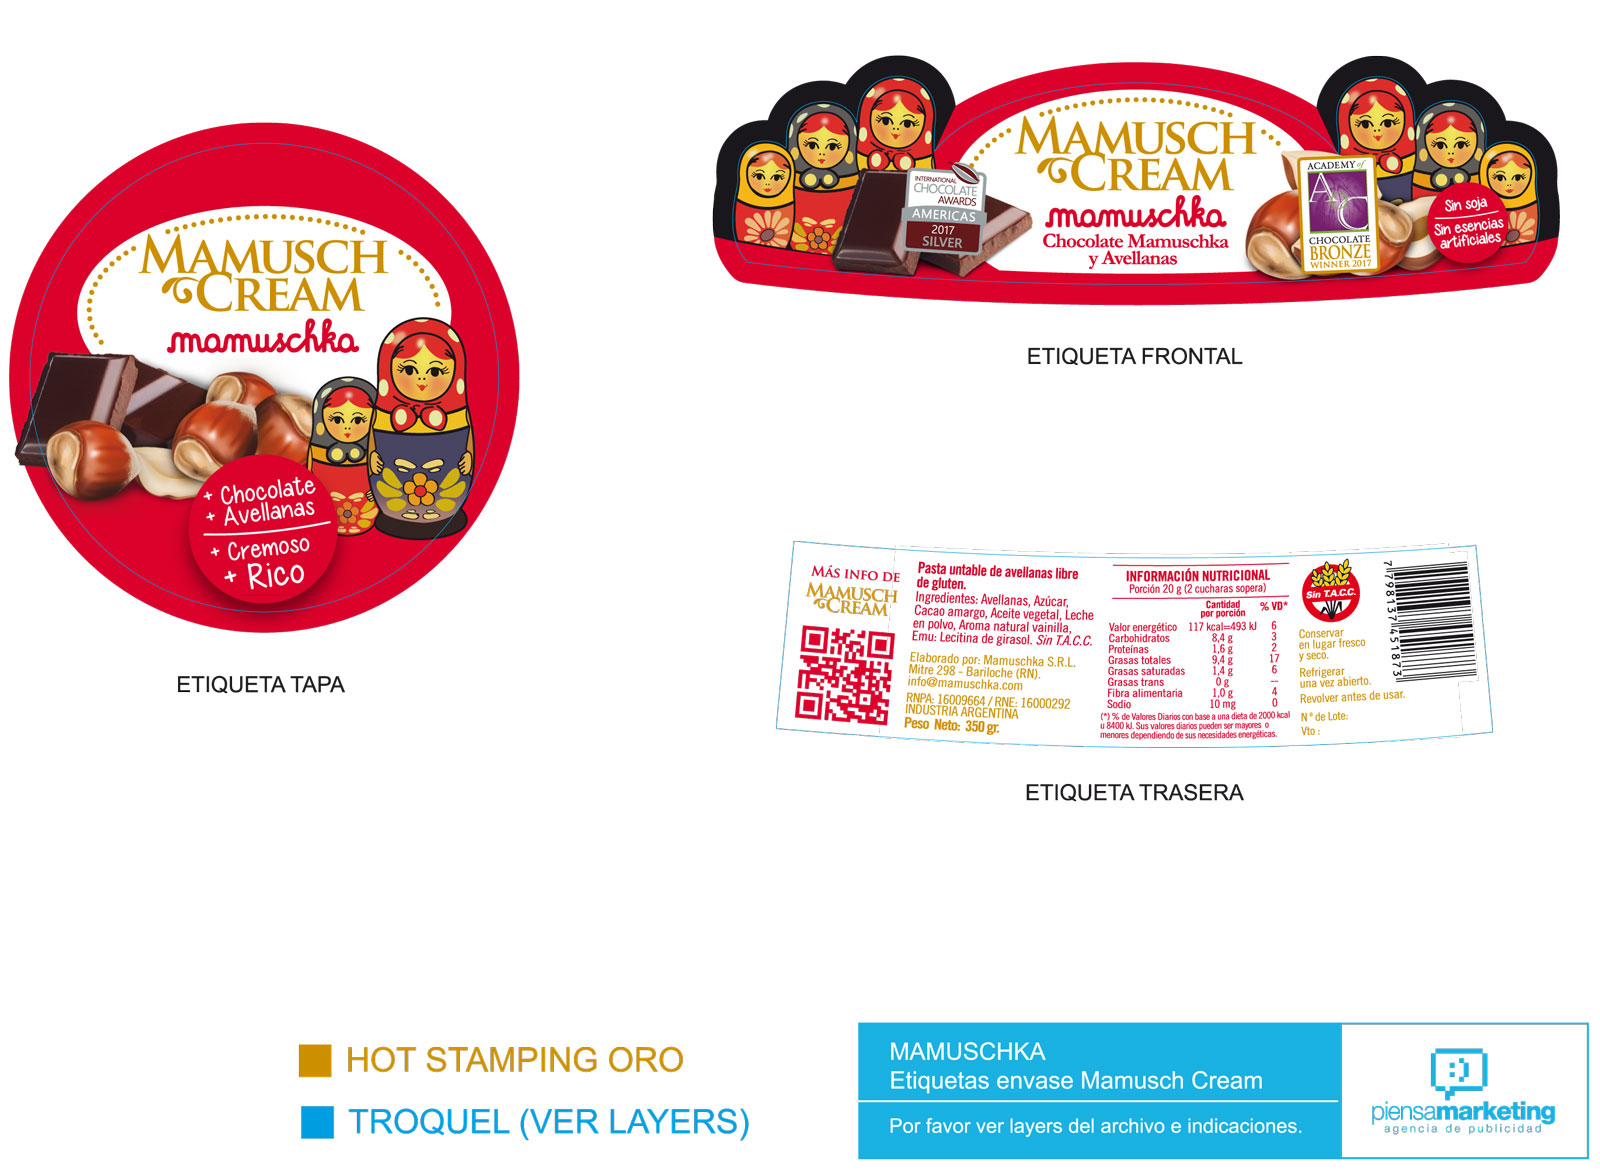 Etiqueta Packaging Mamuschka Piensamarketing Diseño publicidad Mamusch Cream